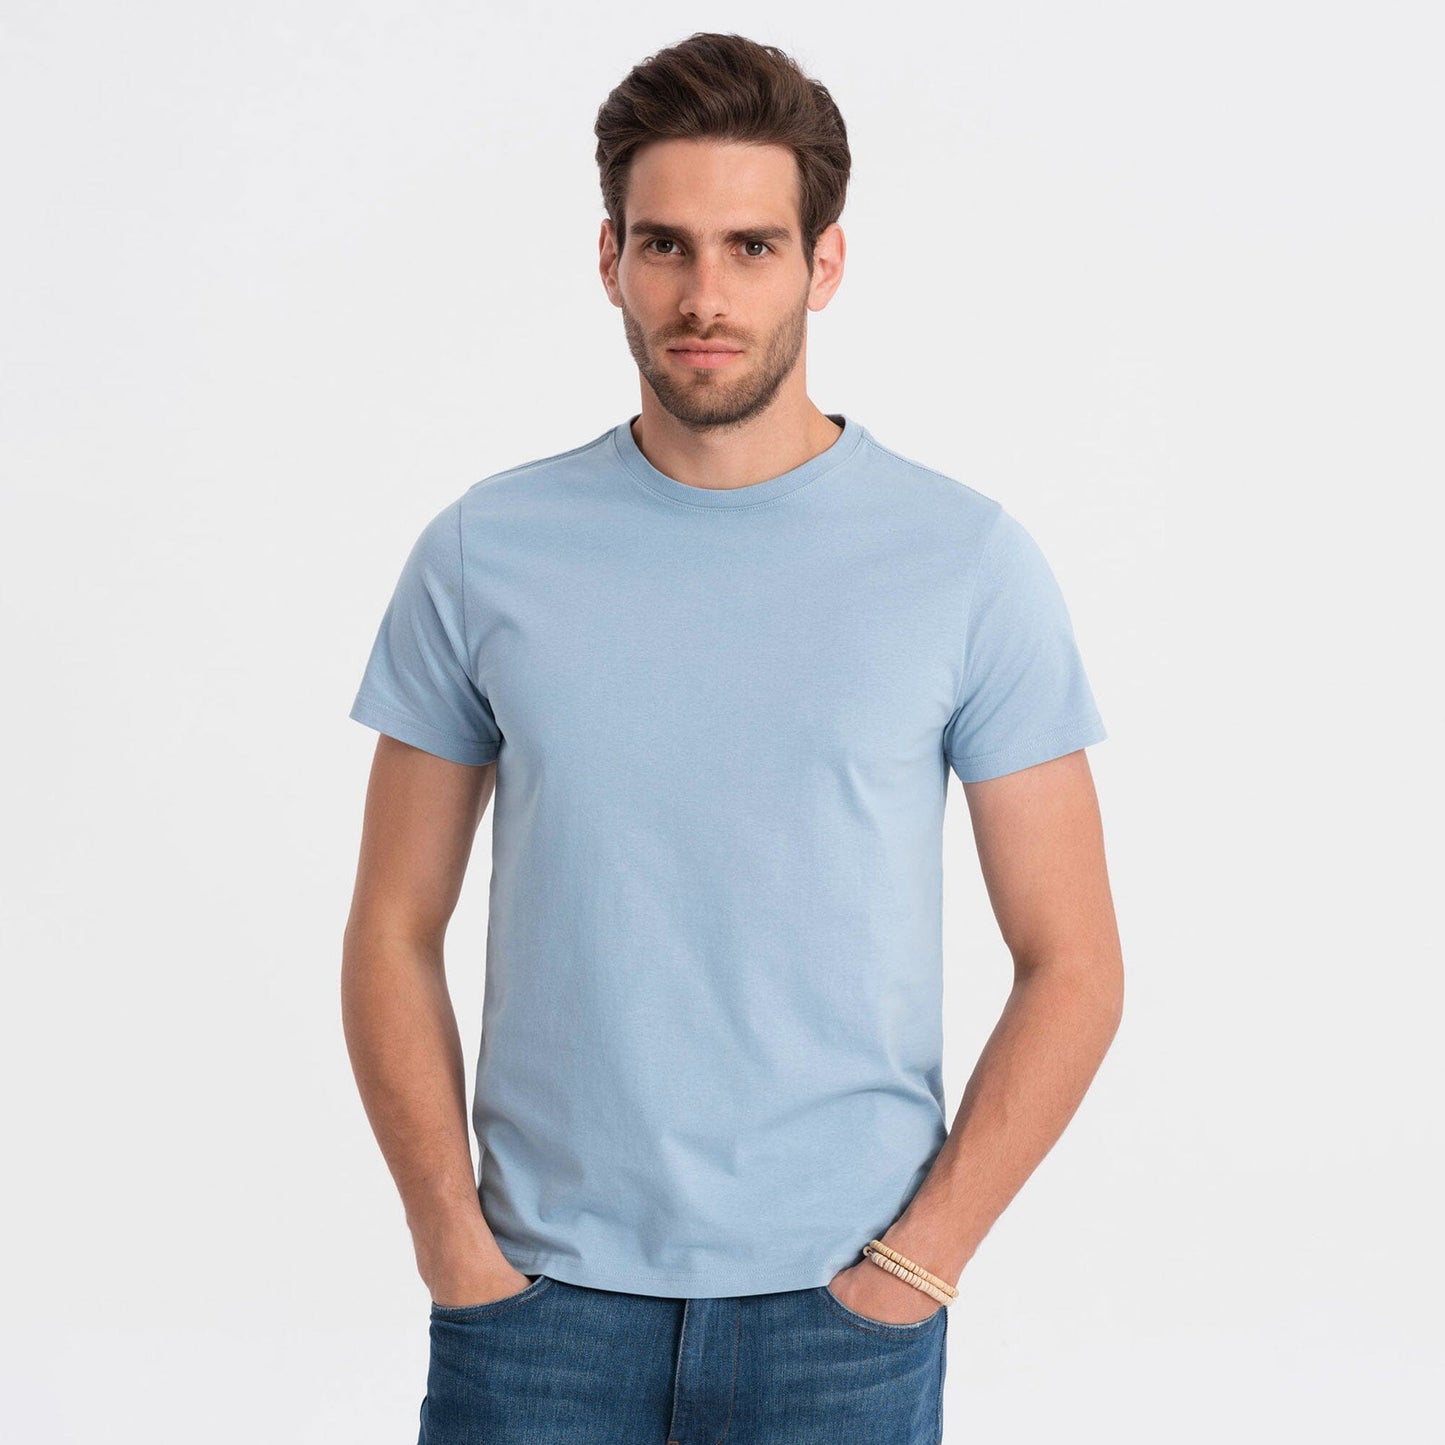 Fevlo Men's Palermo Solid Design Short Sleeve Tee Shirt  